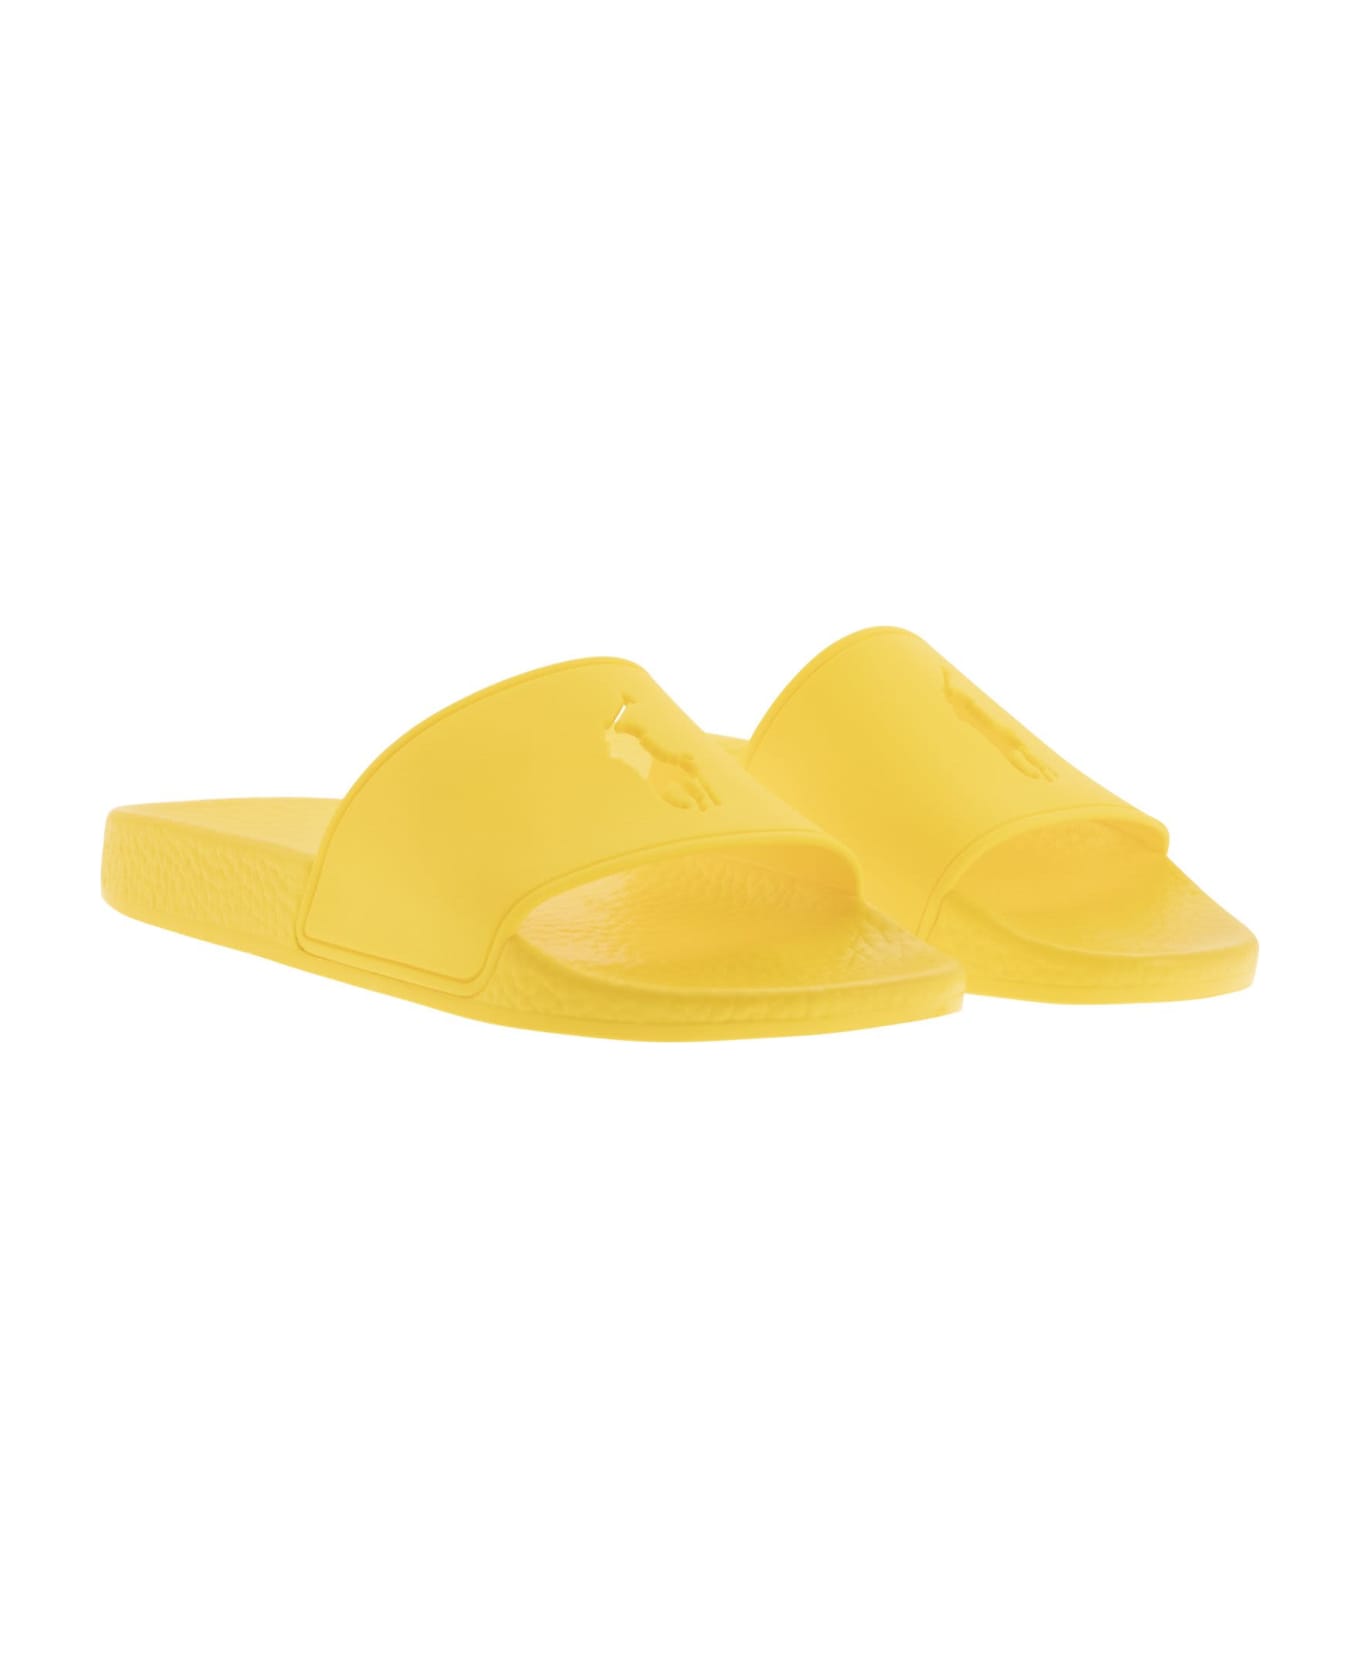 Polo Ralph Lauren Big Pony Slippers - Yellow サンダル